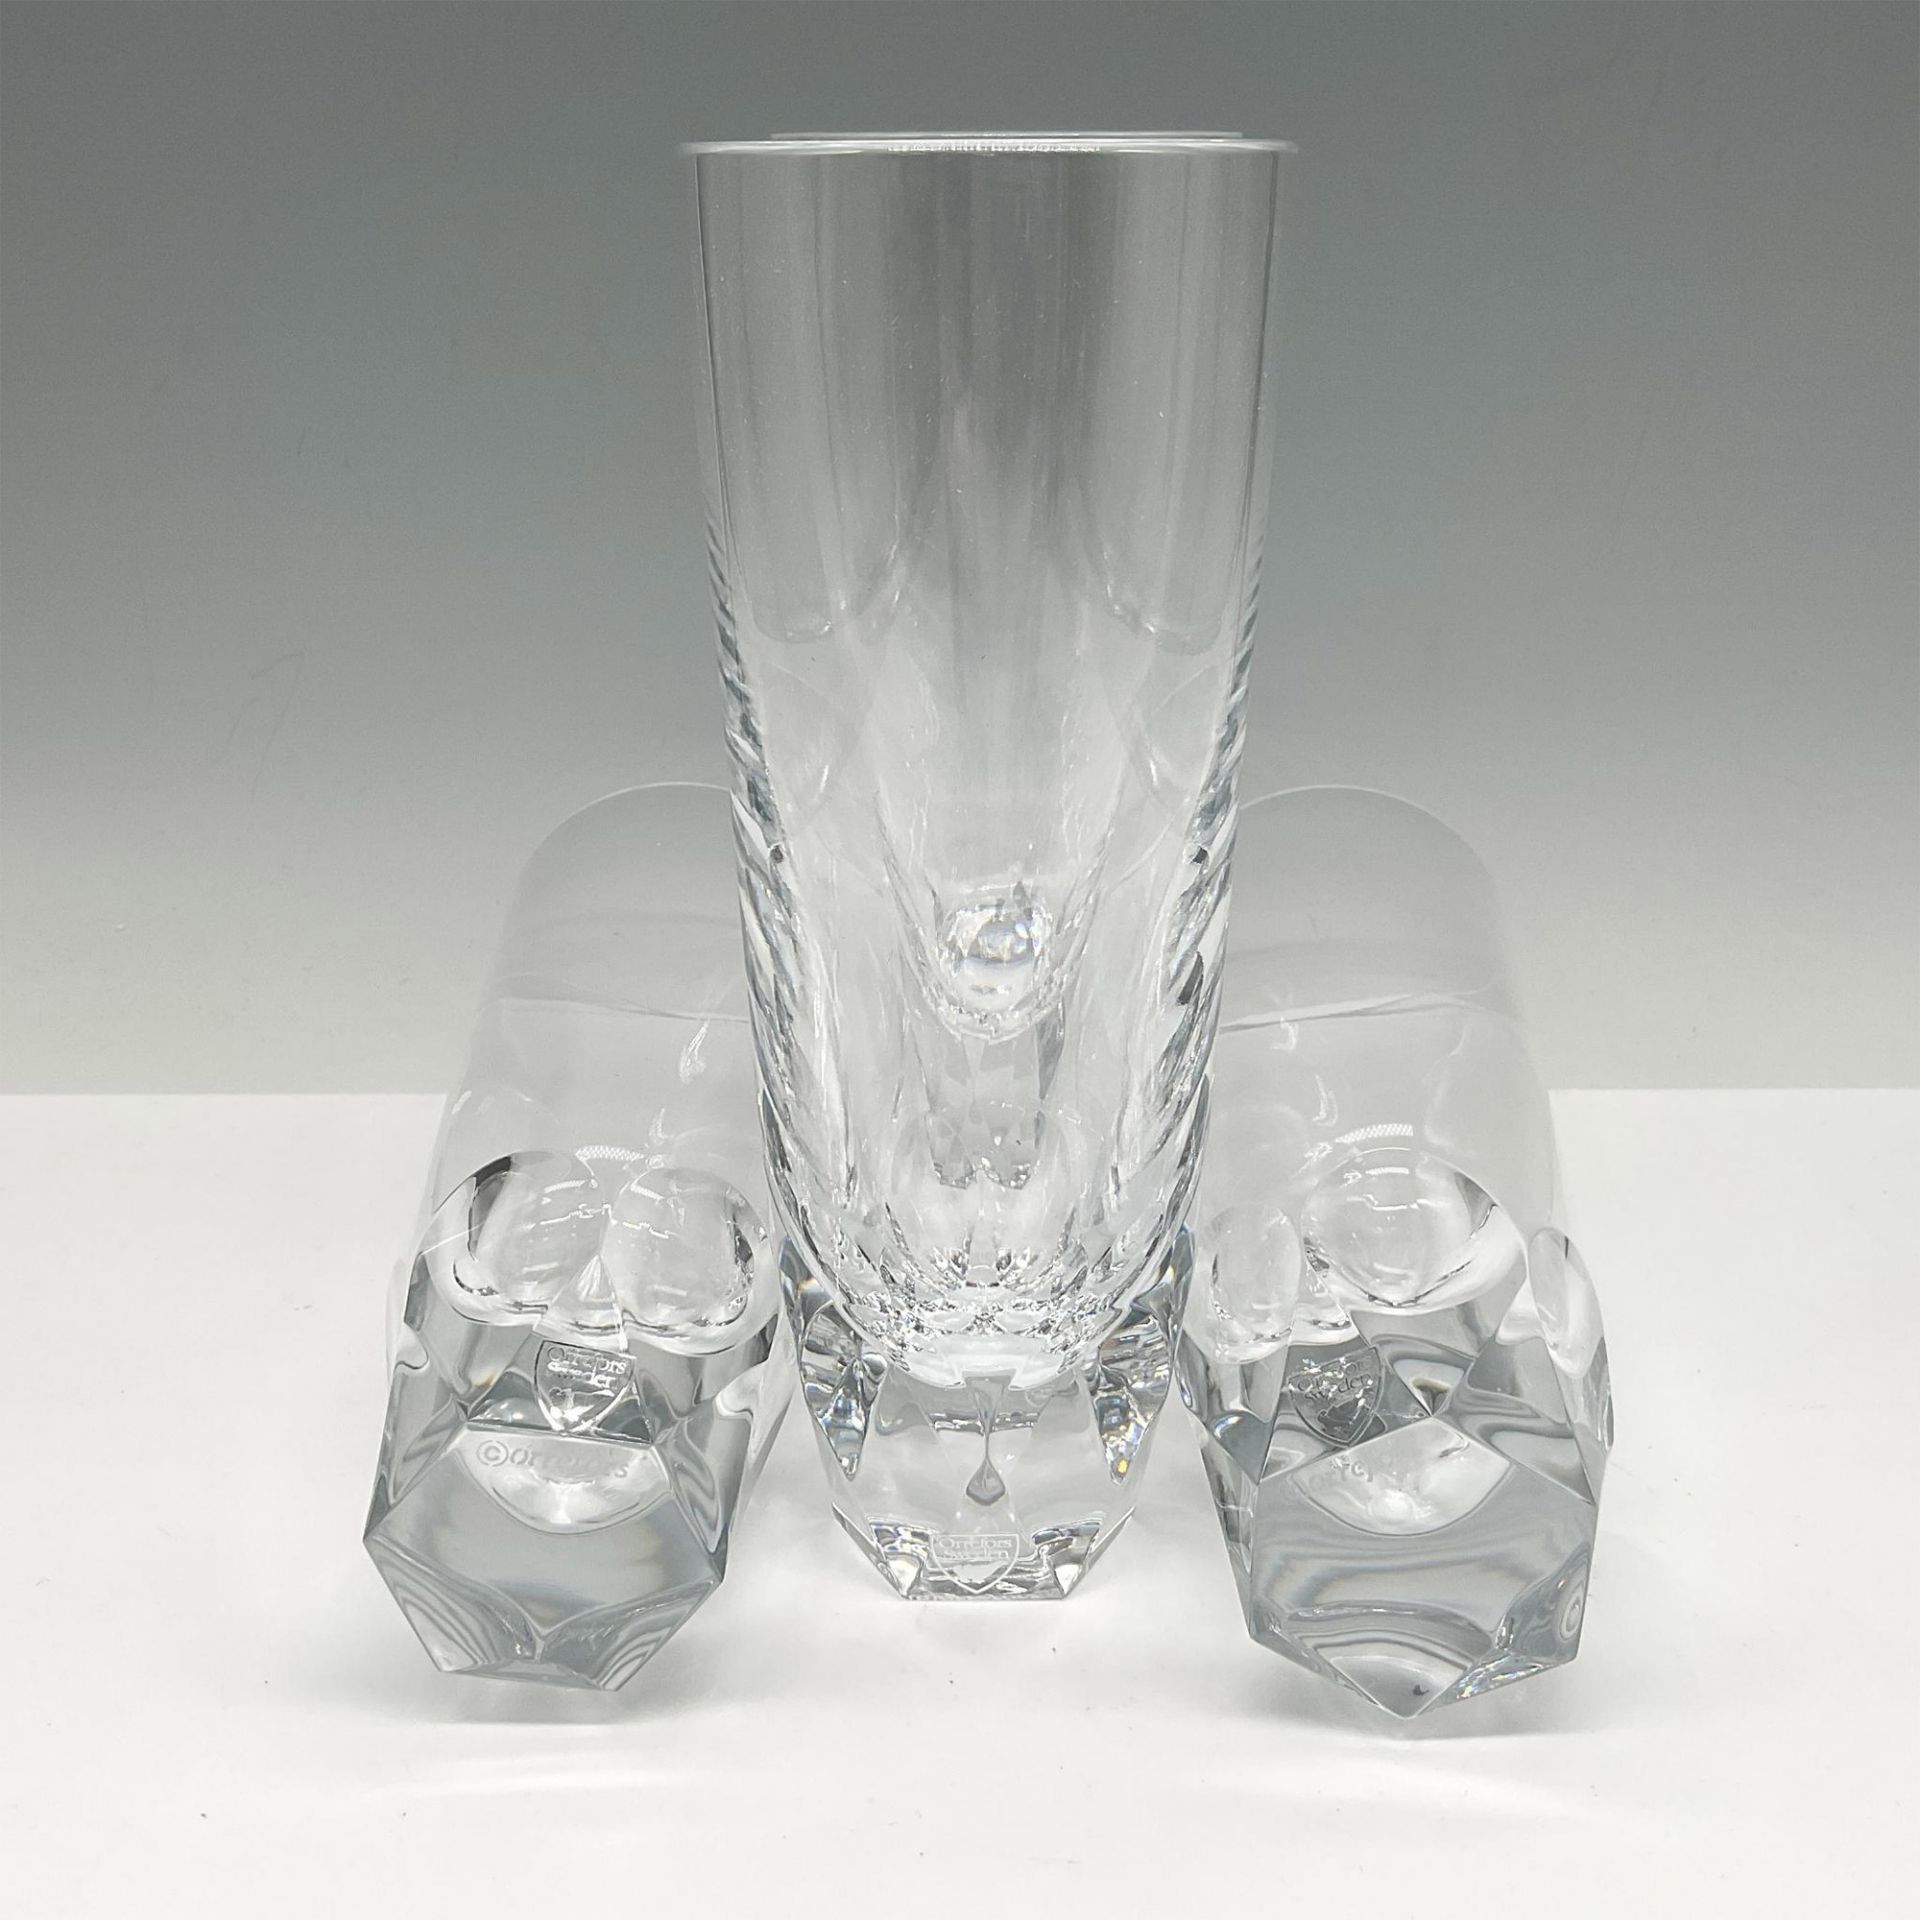 Orrefors Crystal Carat Highball Glasses, Set of 4 - Image 3 of 4